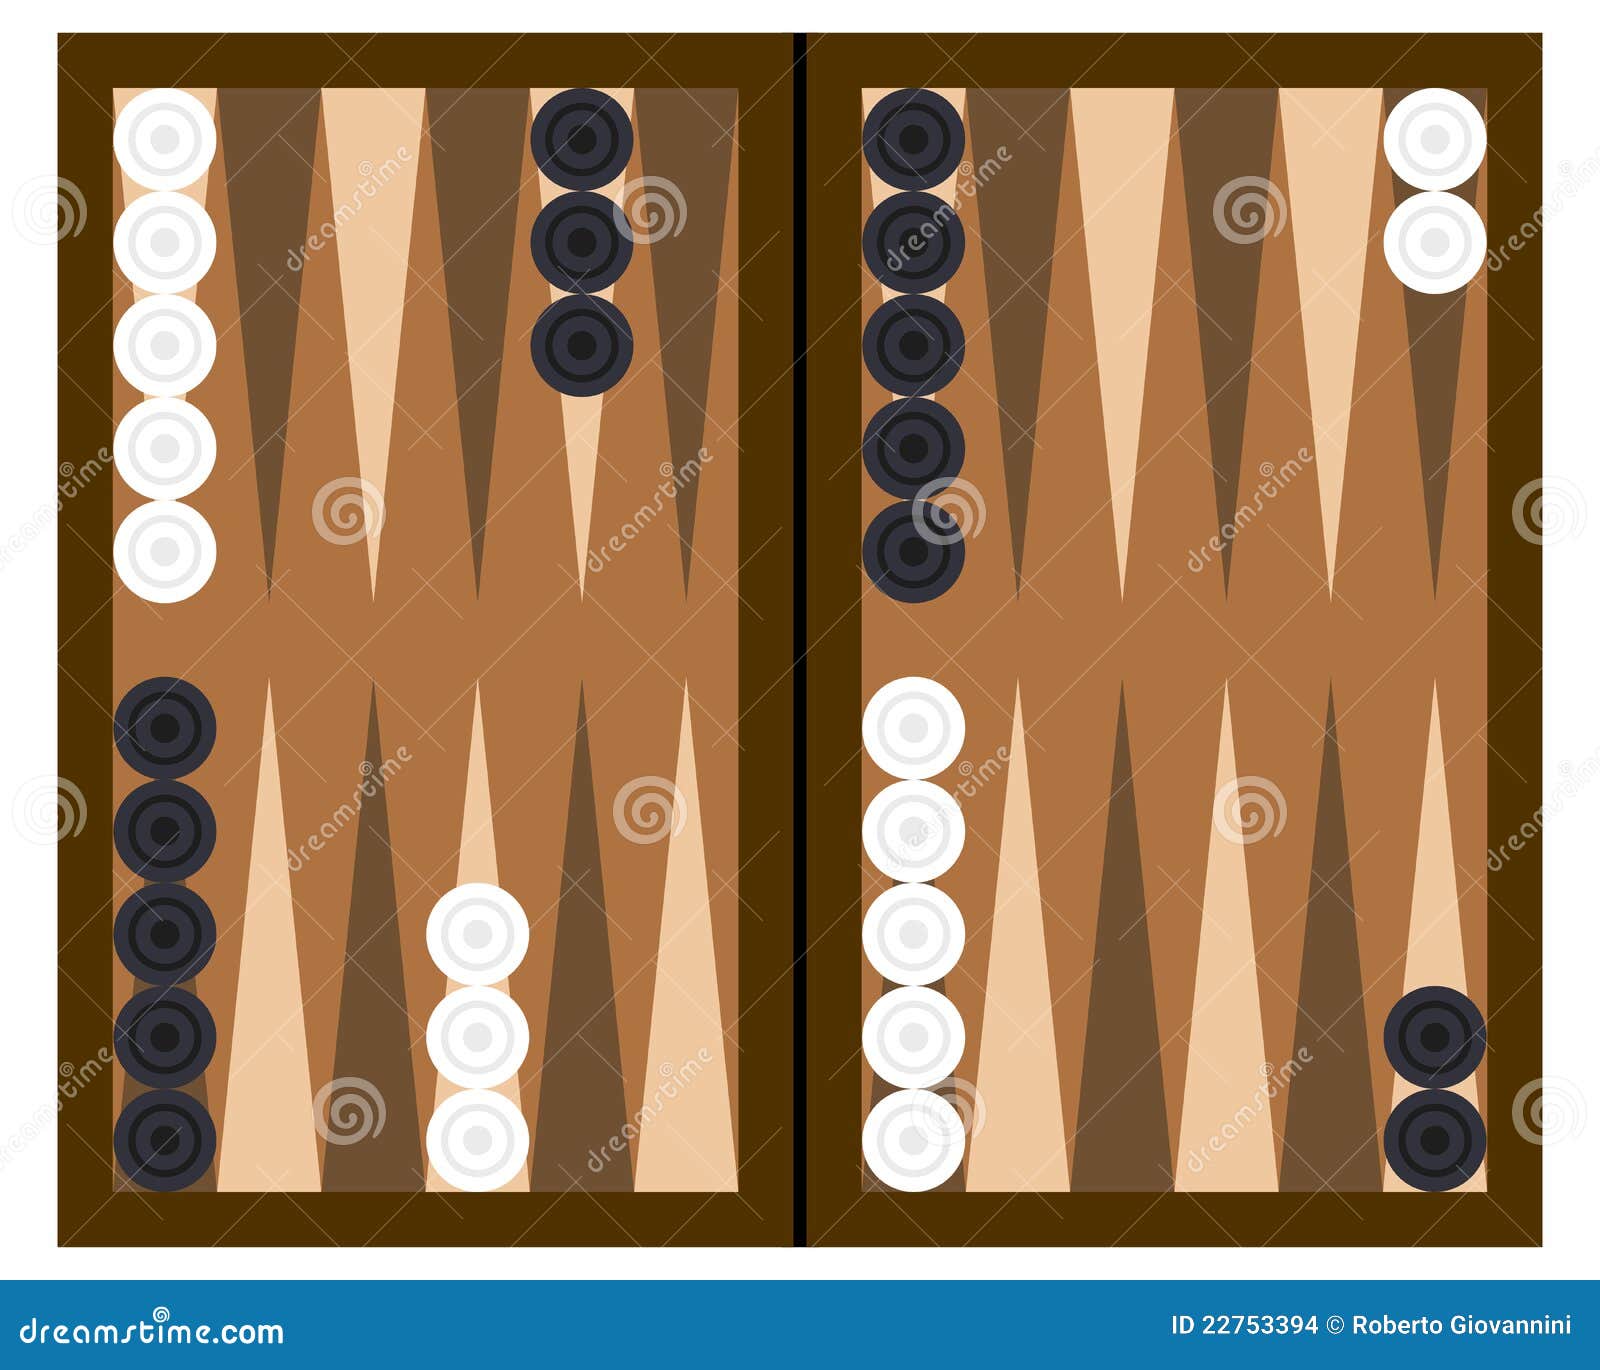 Backgammon Art,Backgammon Print,Eat Sleep Repeat Art,Board Games Art,Backgammon Board,Backgammon Board Art,Game Room Poster-DIGITAL DOWNLOAD